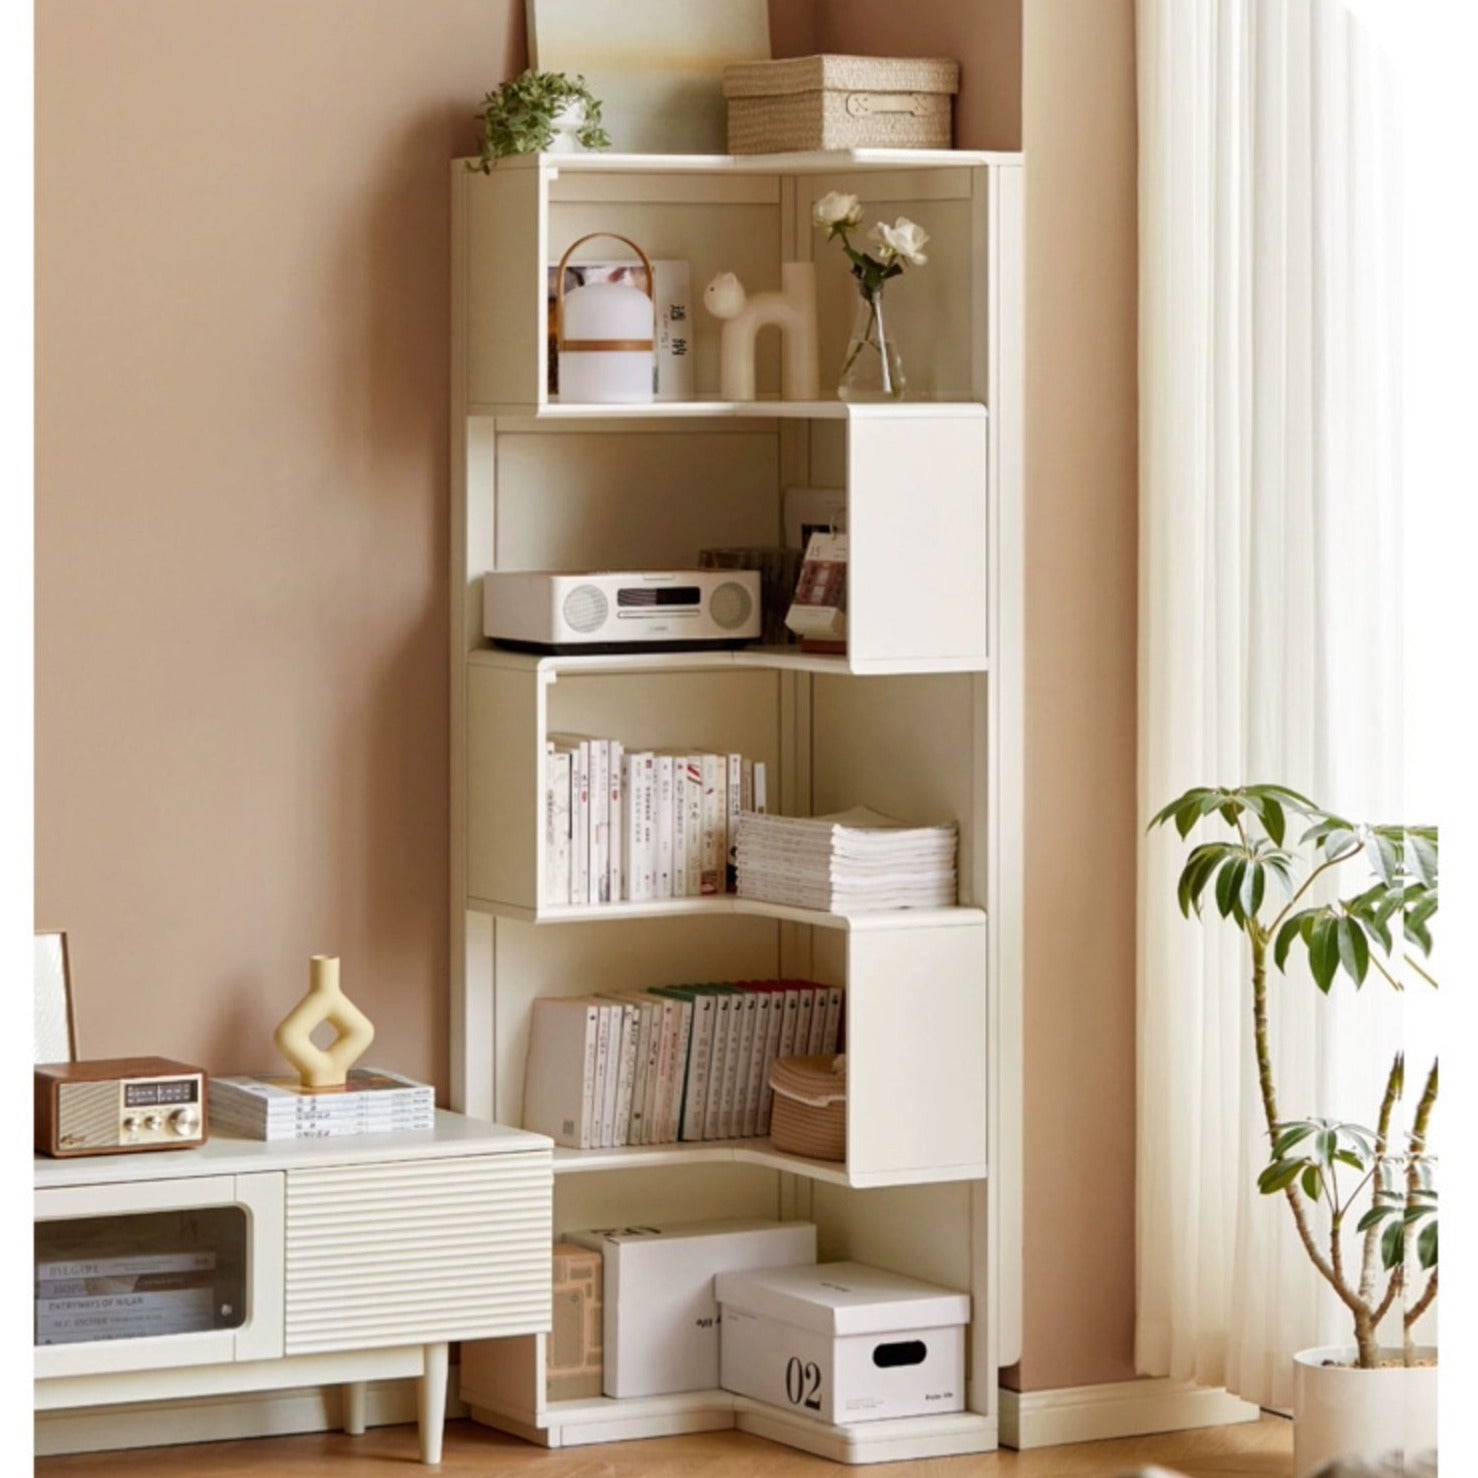 Poplar solid wood corner French cream style bookshelf